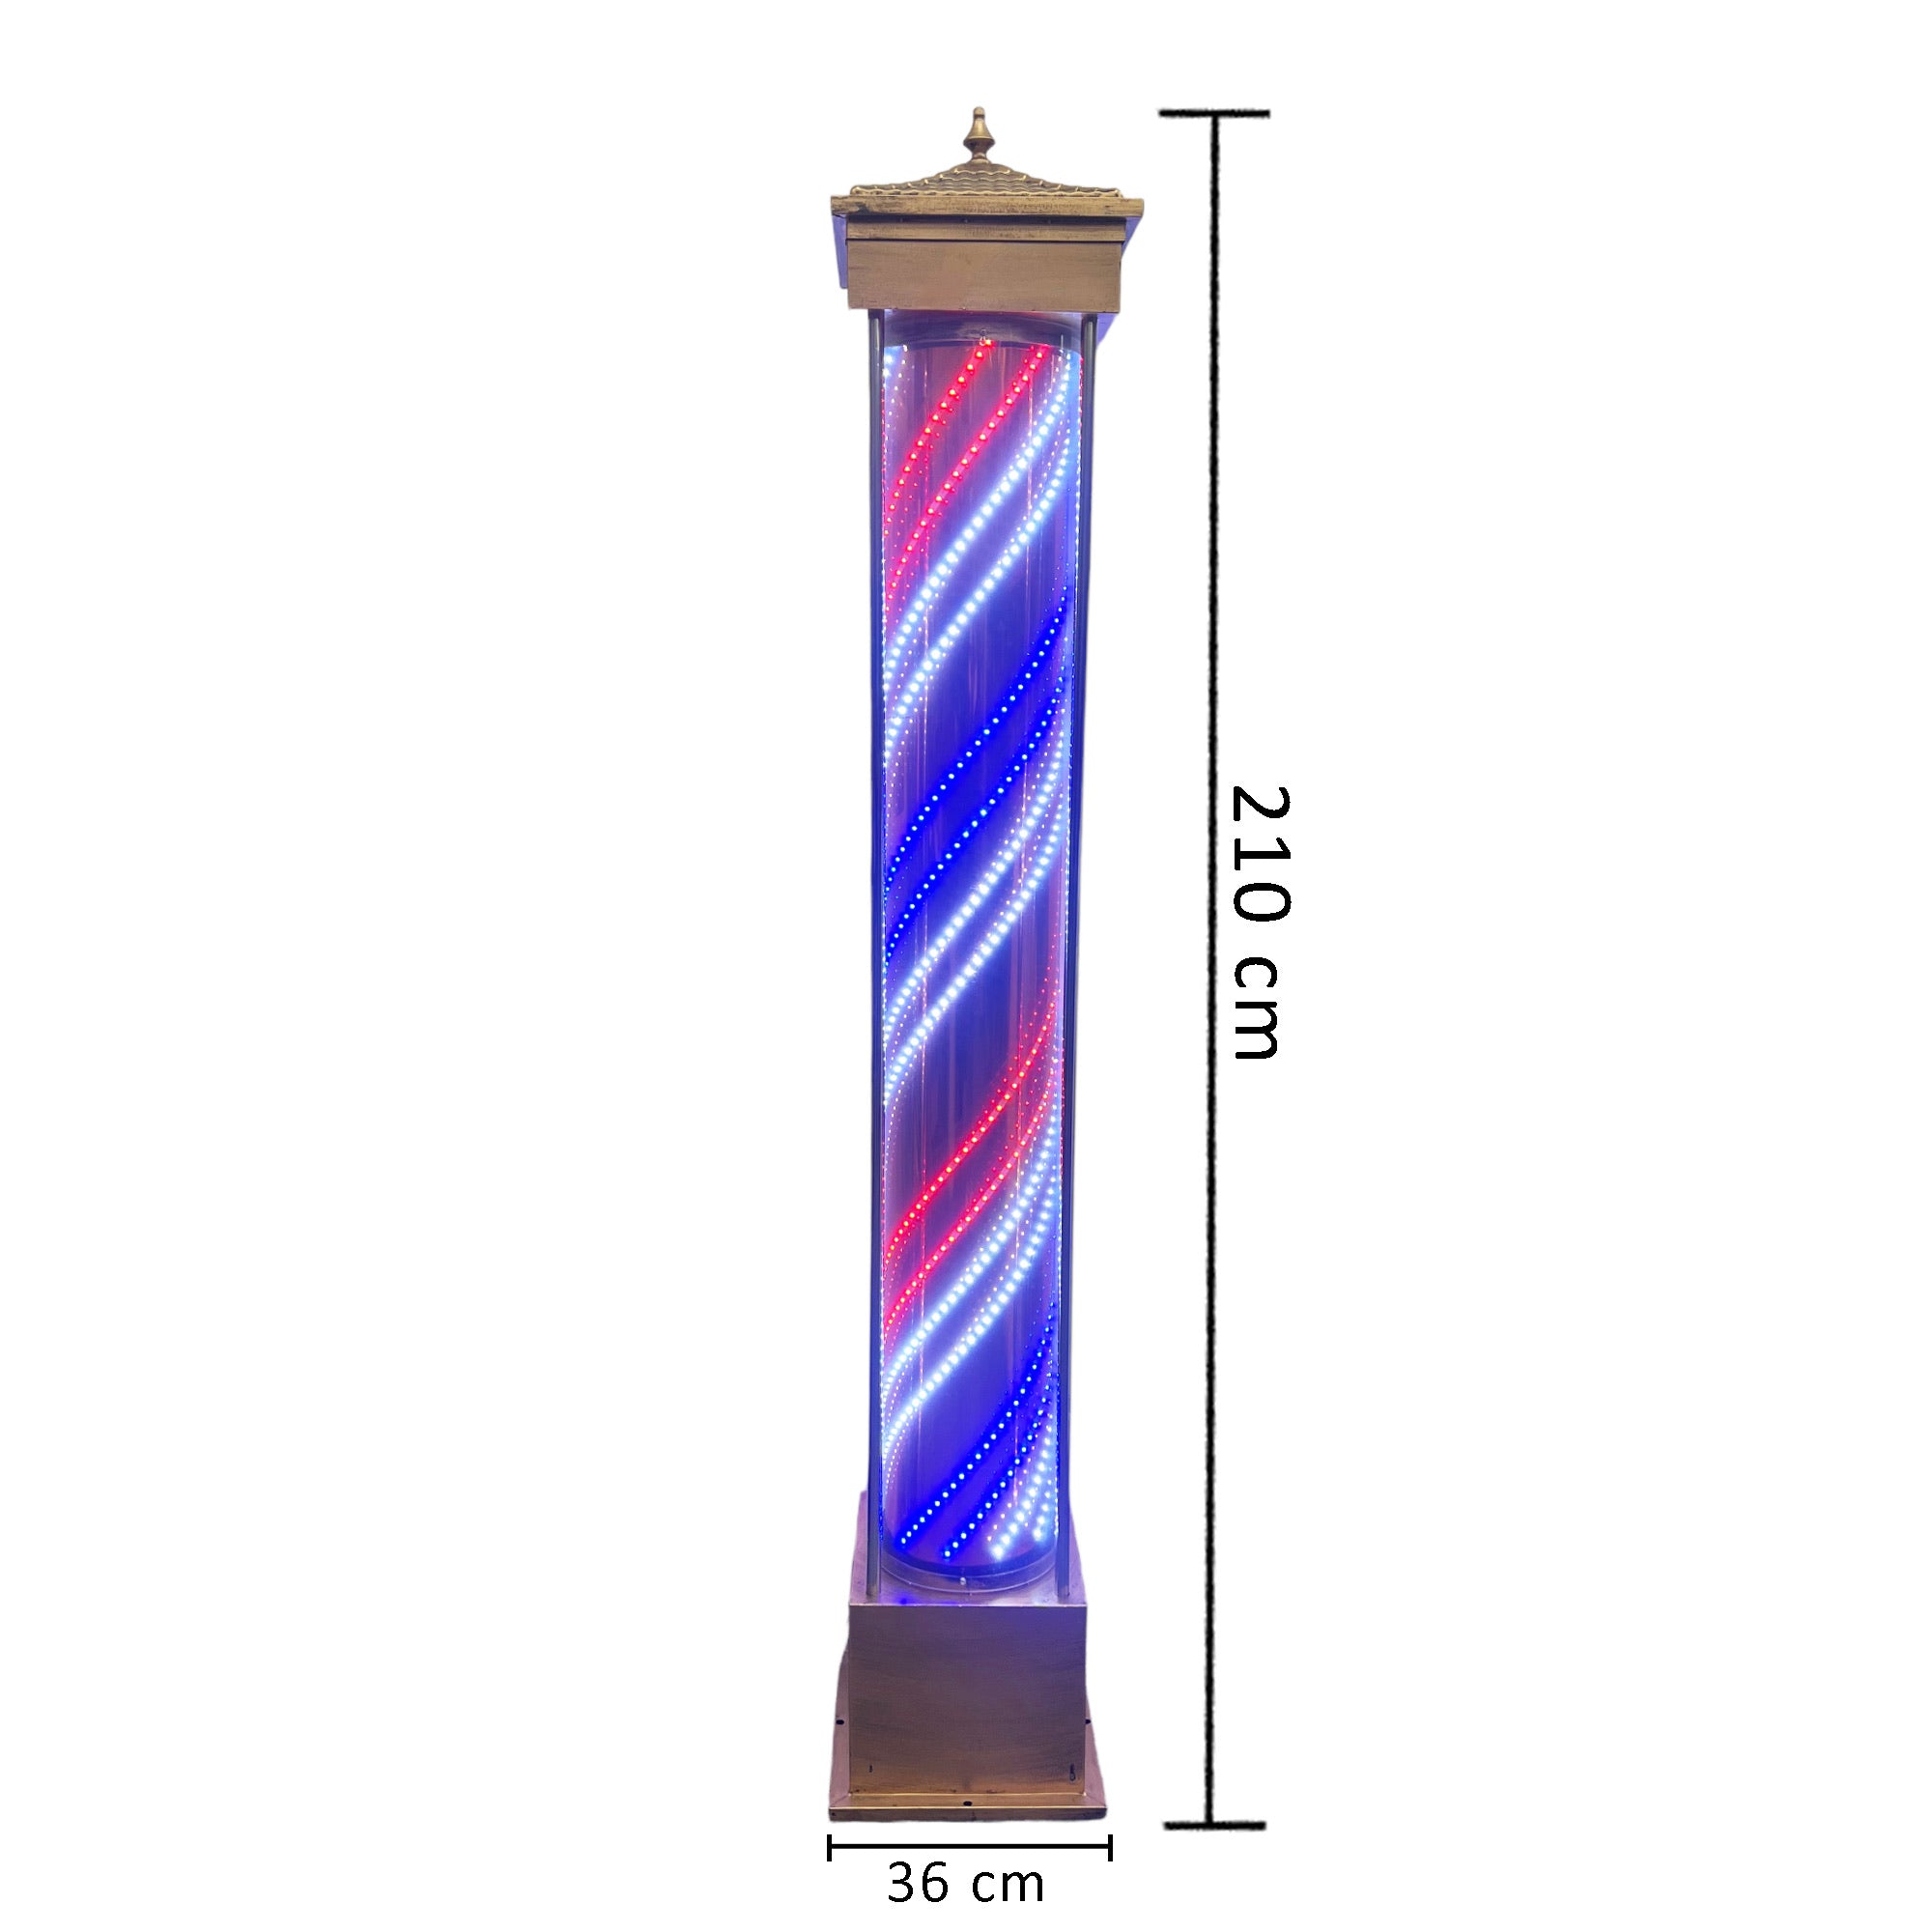 Gabri - Lantern Style Classic Barber Pole Floor Digital Led Light (Bronze & Copper Rotating Illuminating Stripes) 2.1m